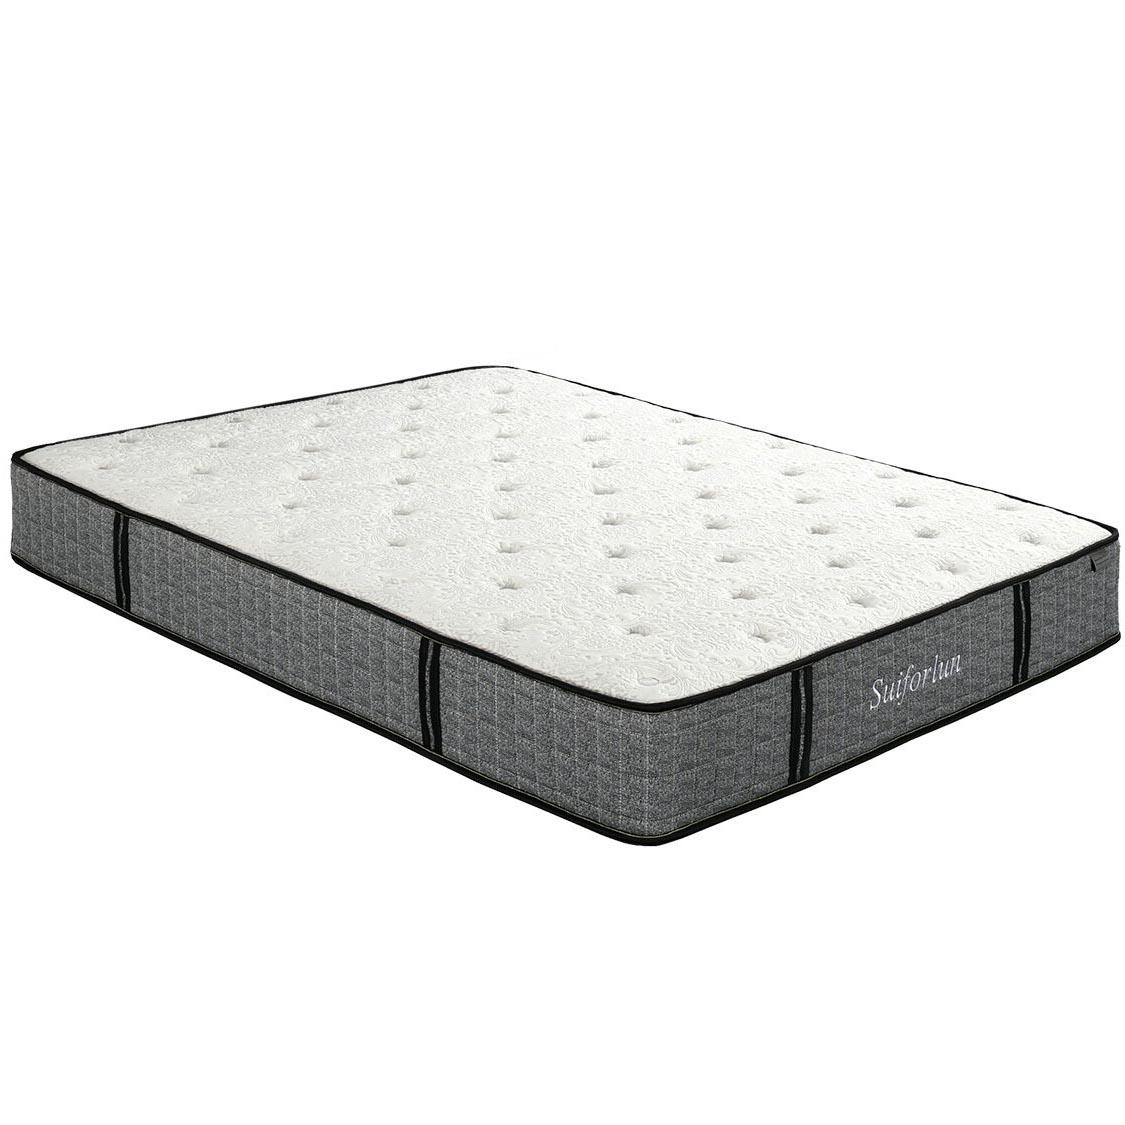 Suiforlun mattress coils innerspring best hybrid bed manufacturer for hotel-2